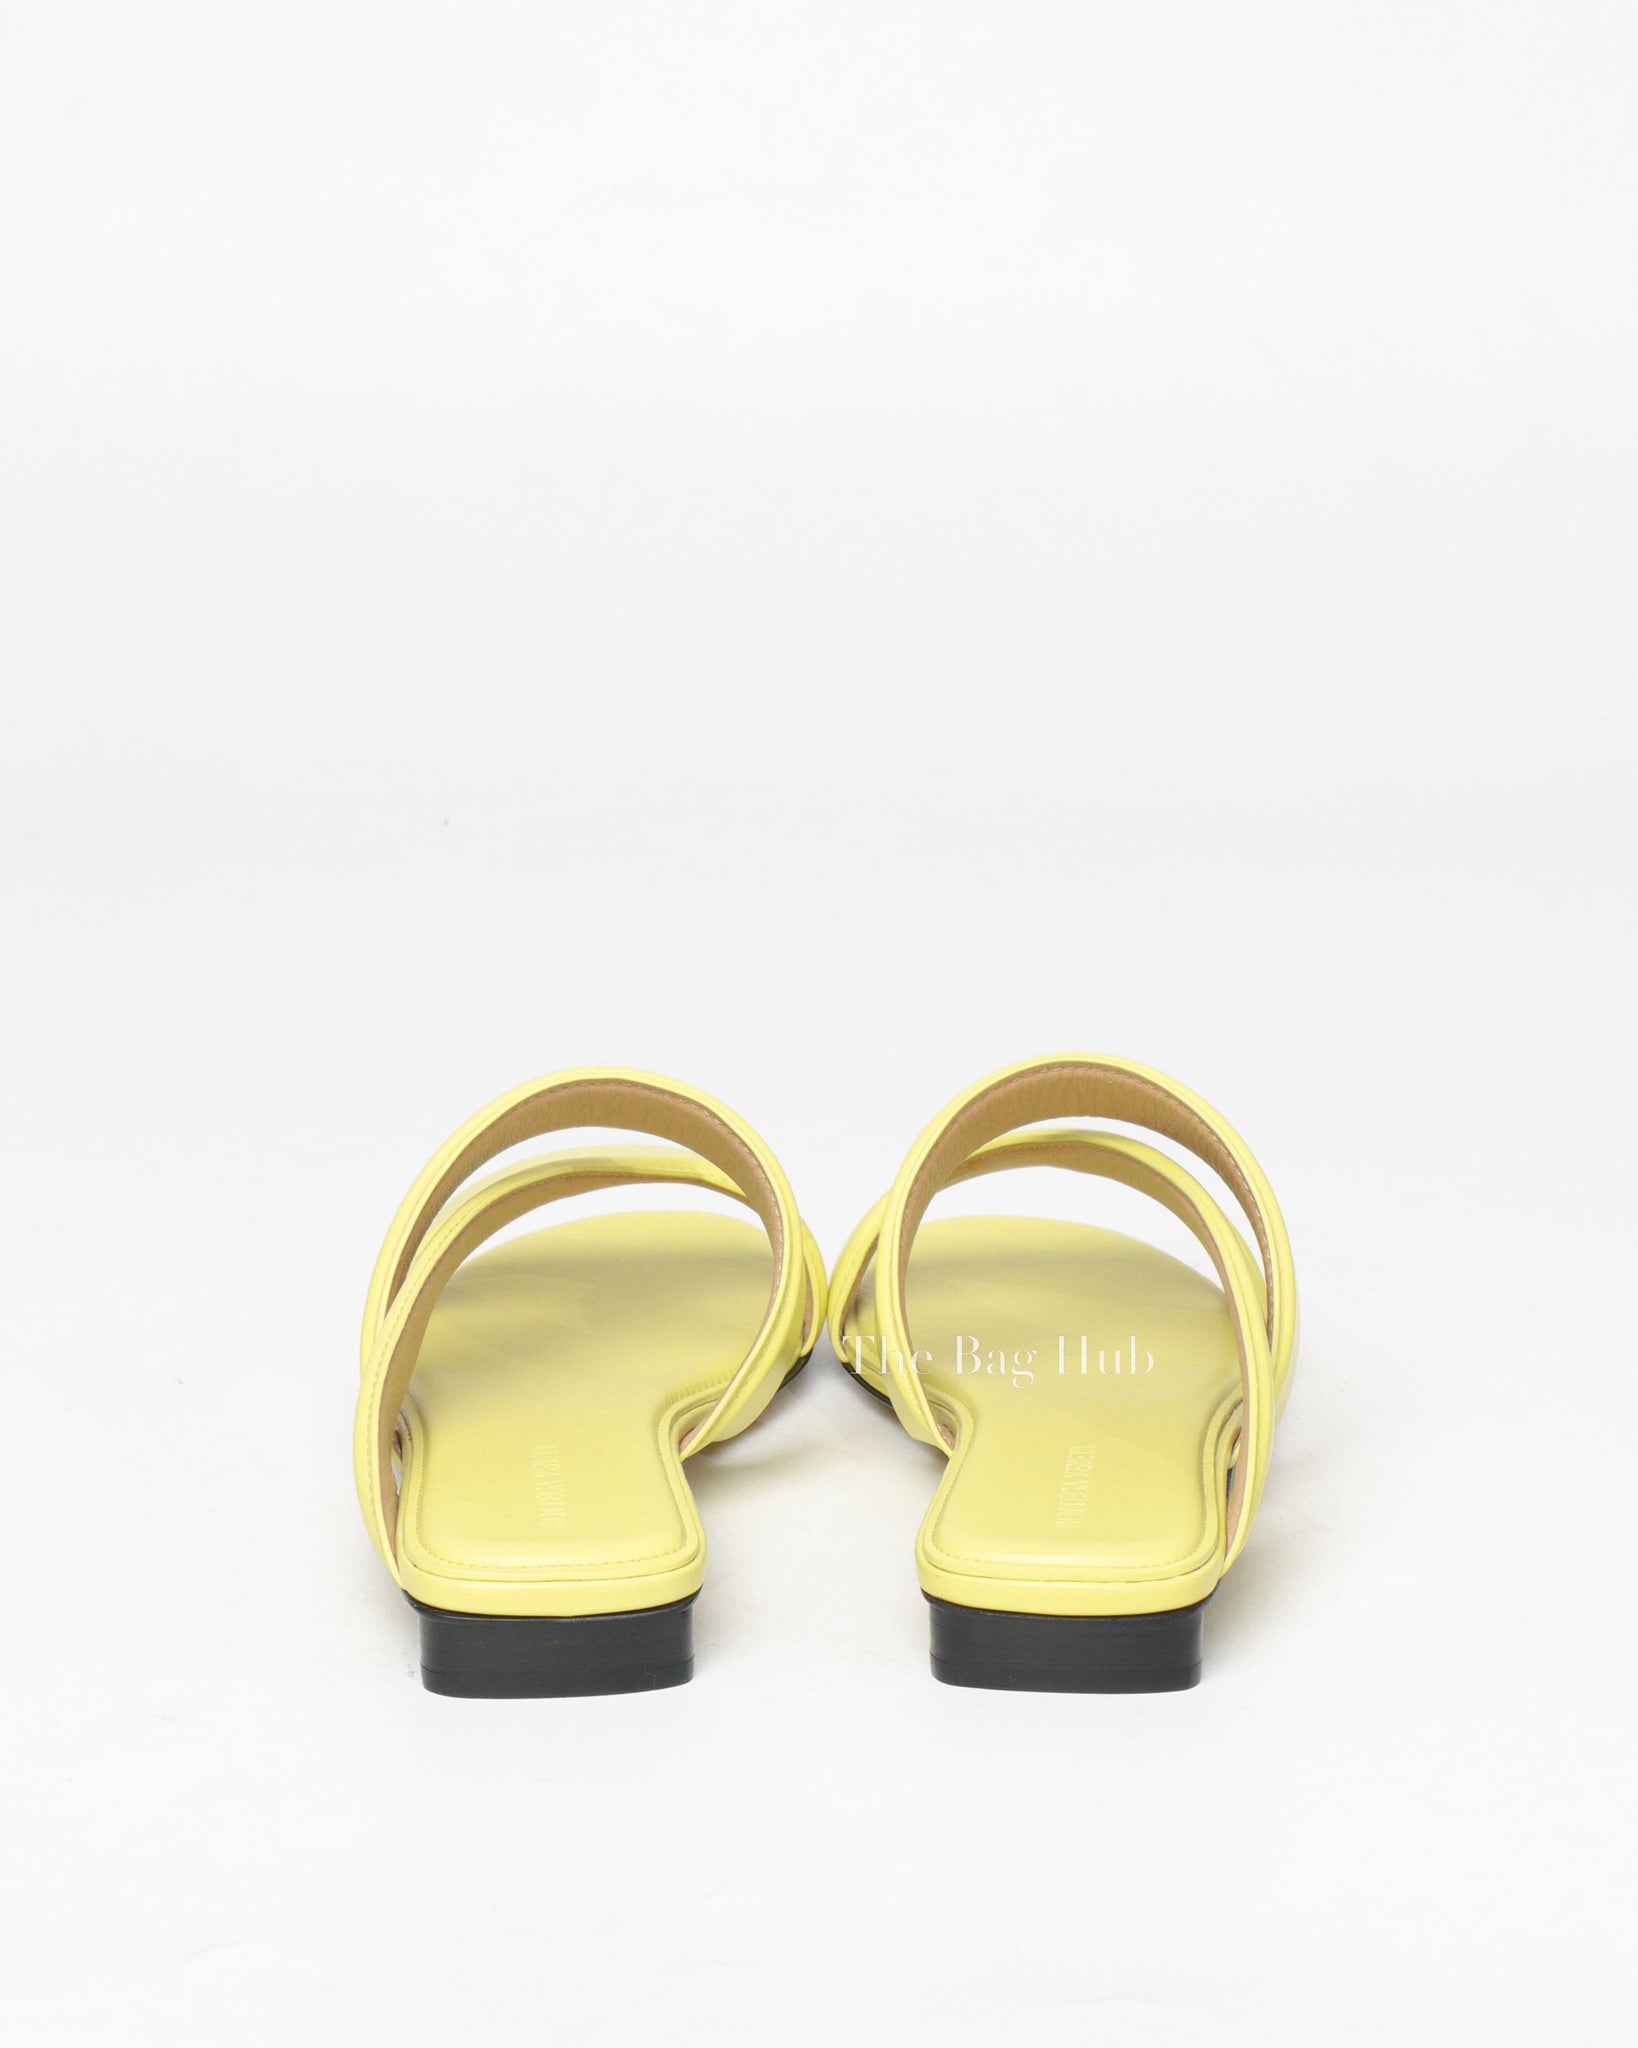 Bottega Veneta Light Yellow Leather Band Flat Sandals Size 38-7